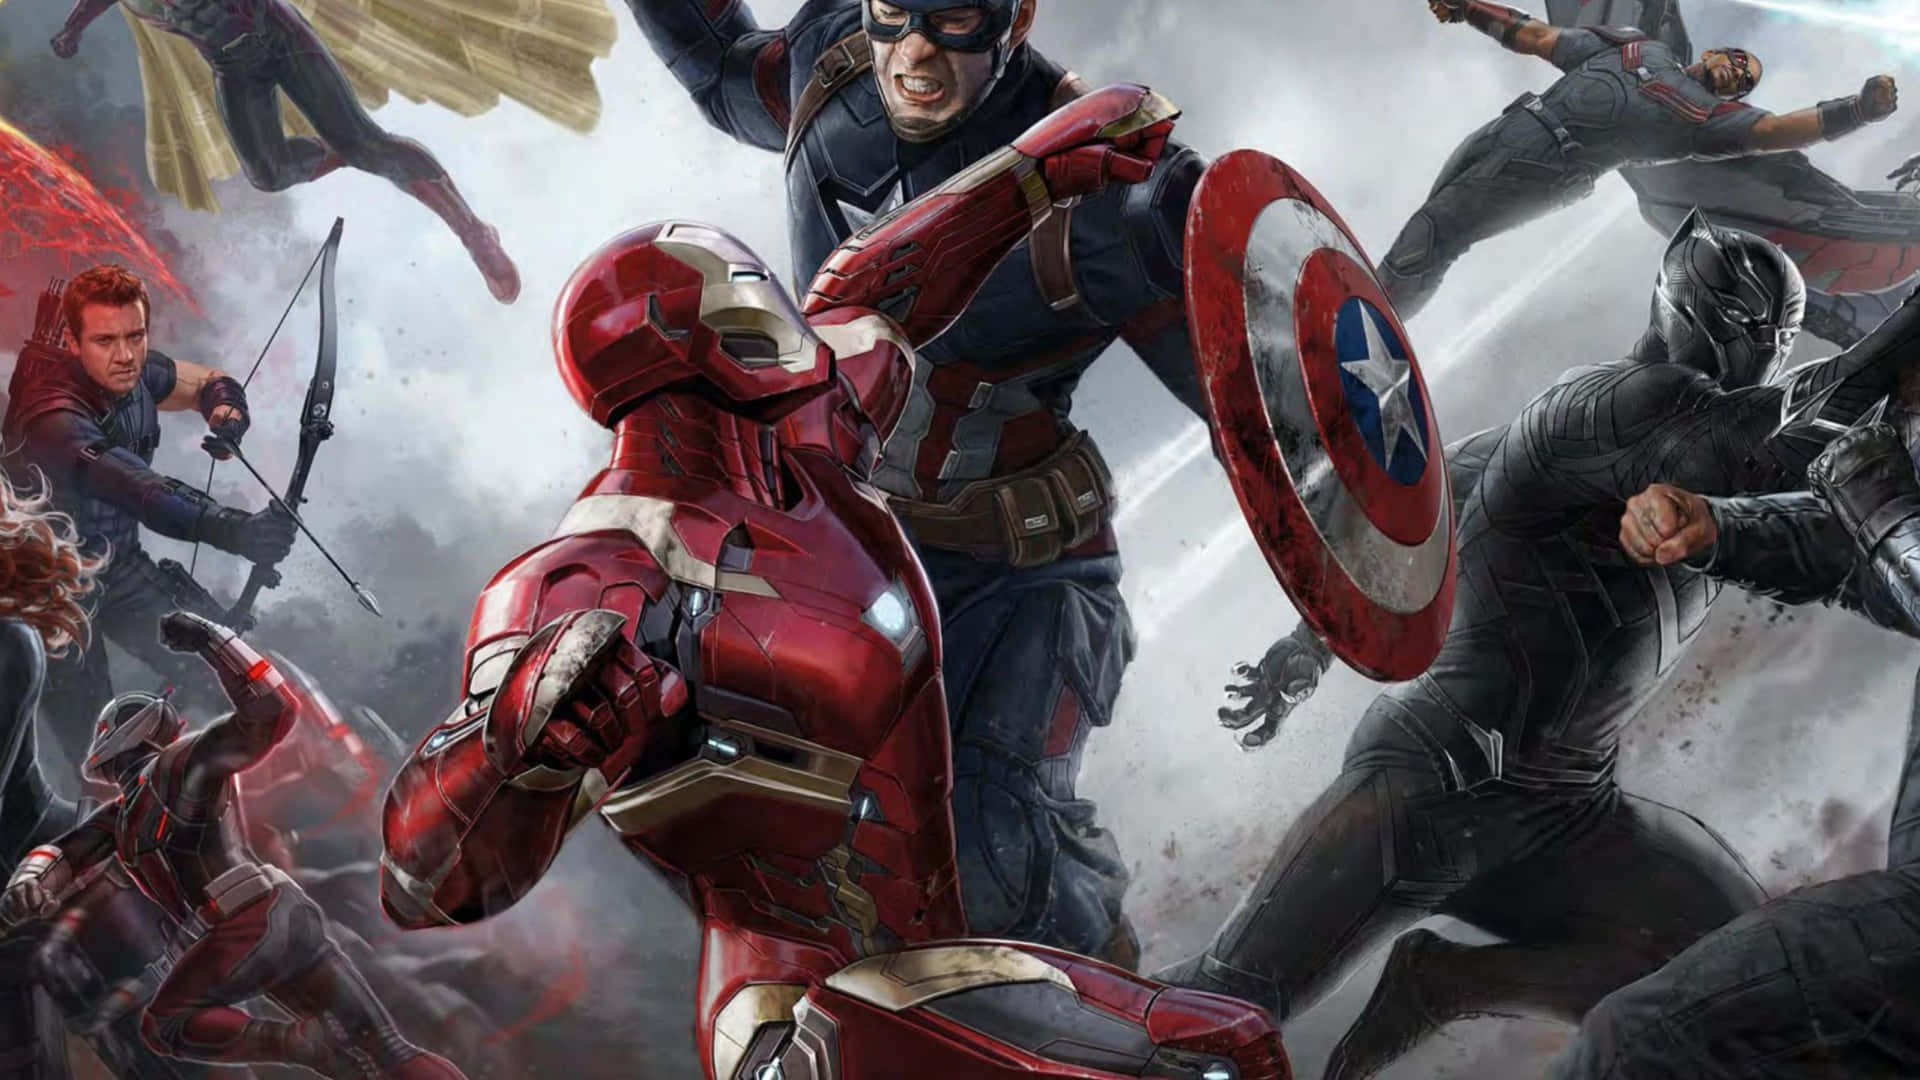 "Be the hero. Be like Captain America."